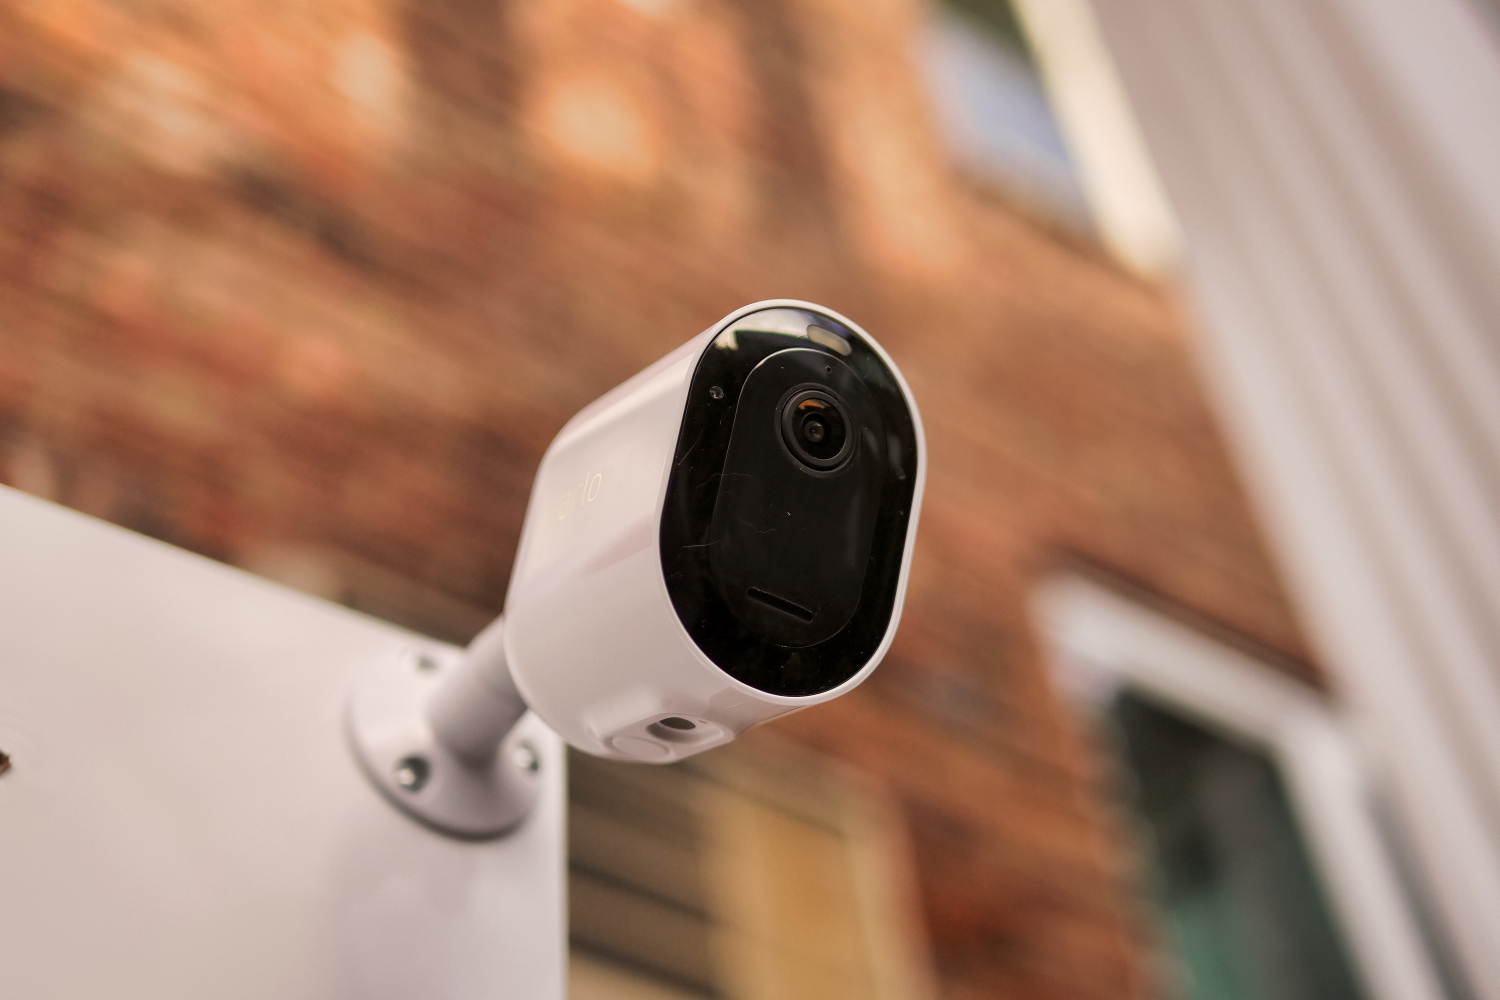 Security Camera You Buy on Black Friday | Digital Trends